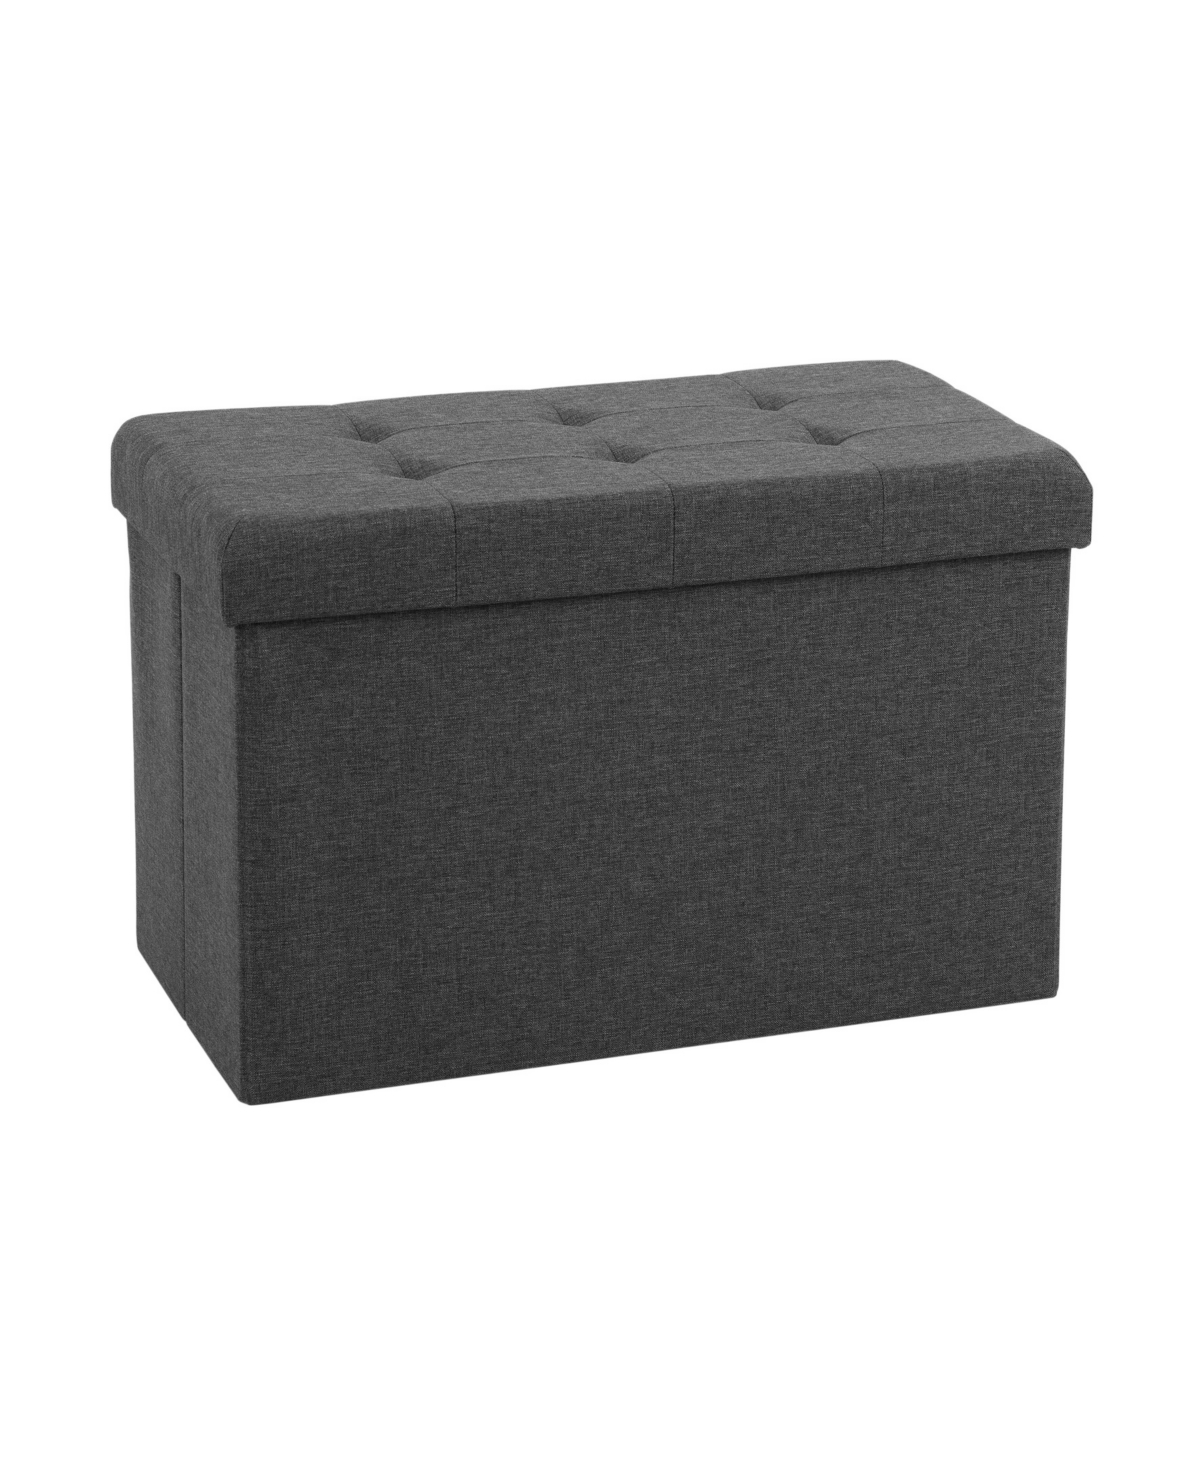 Foldable Storage Bench Ottoman - Dark Grey